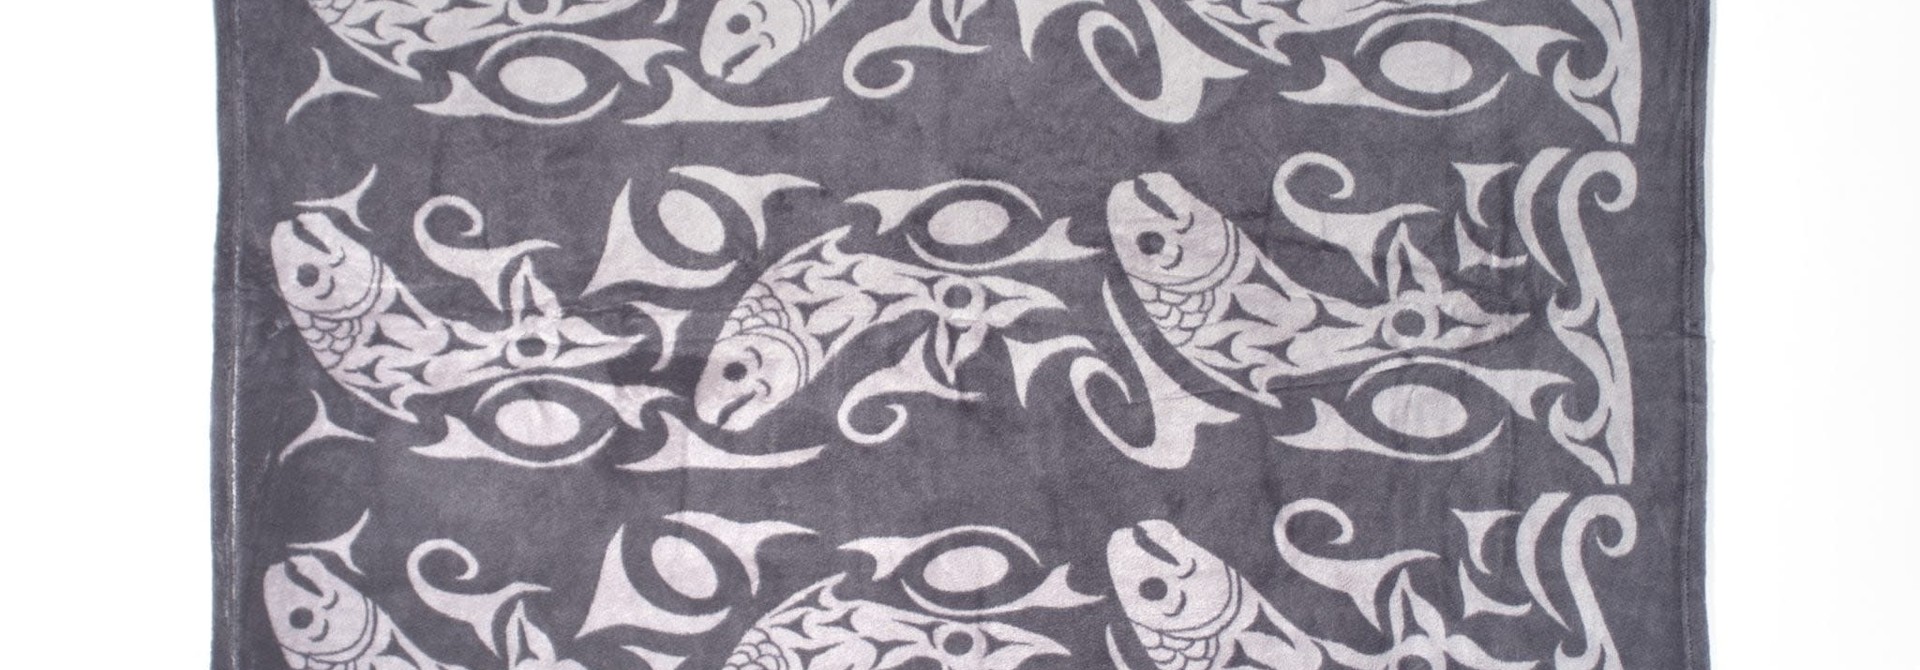 Kanata Blanket-Returning of the Salmon (Charcoal) by Debra Sparrow